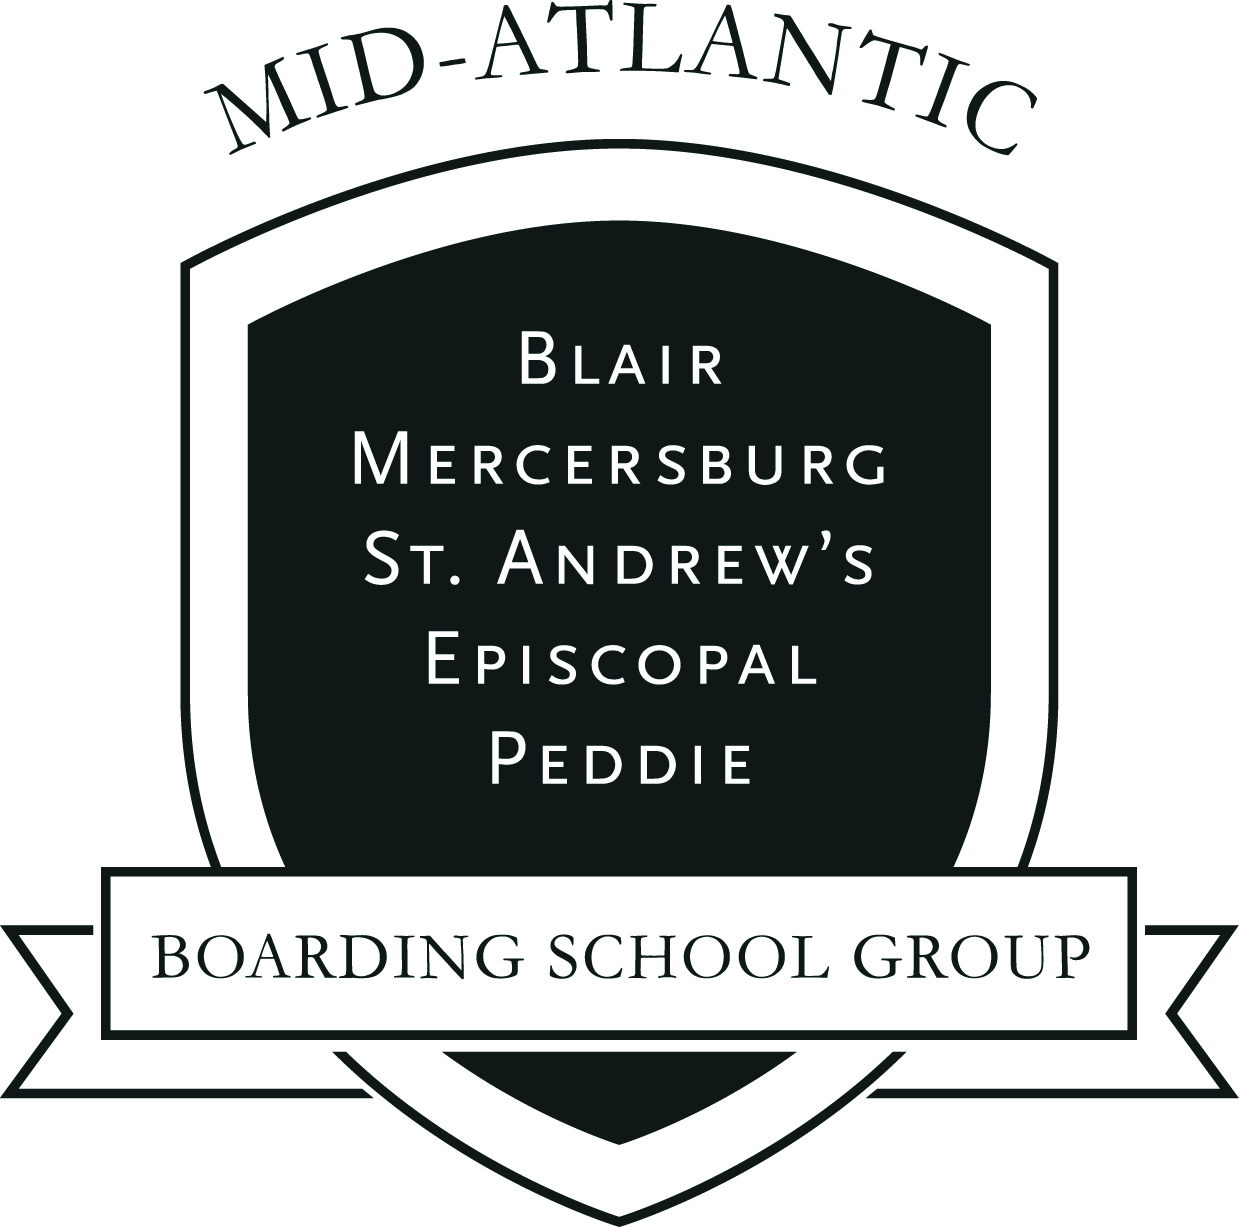 Mid-Atlantic Boarding School Group